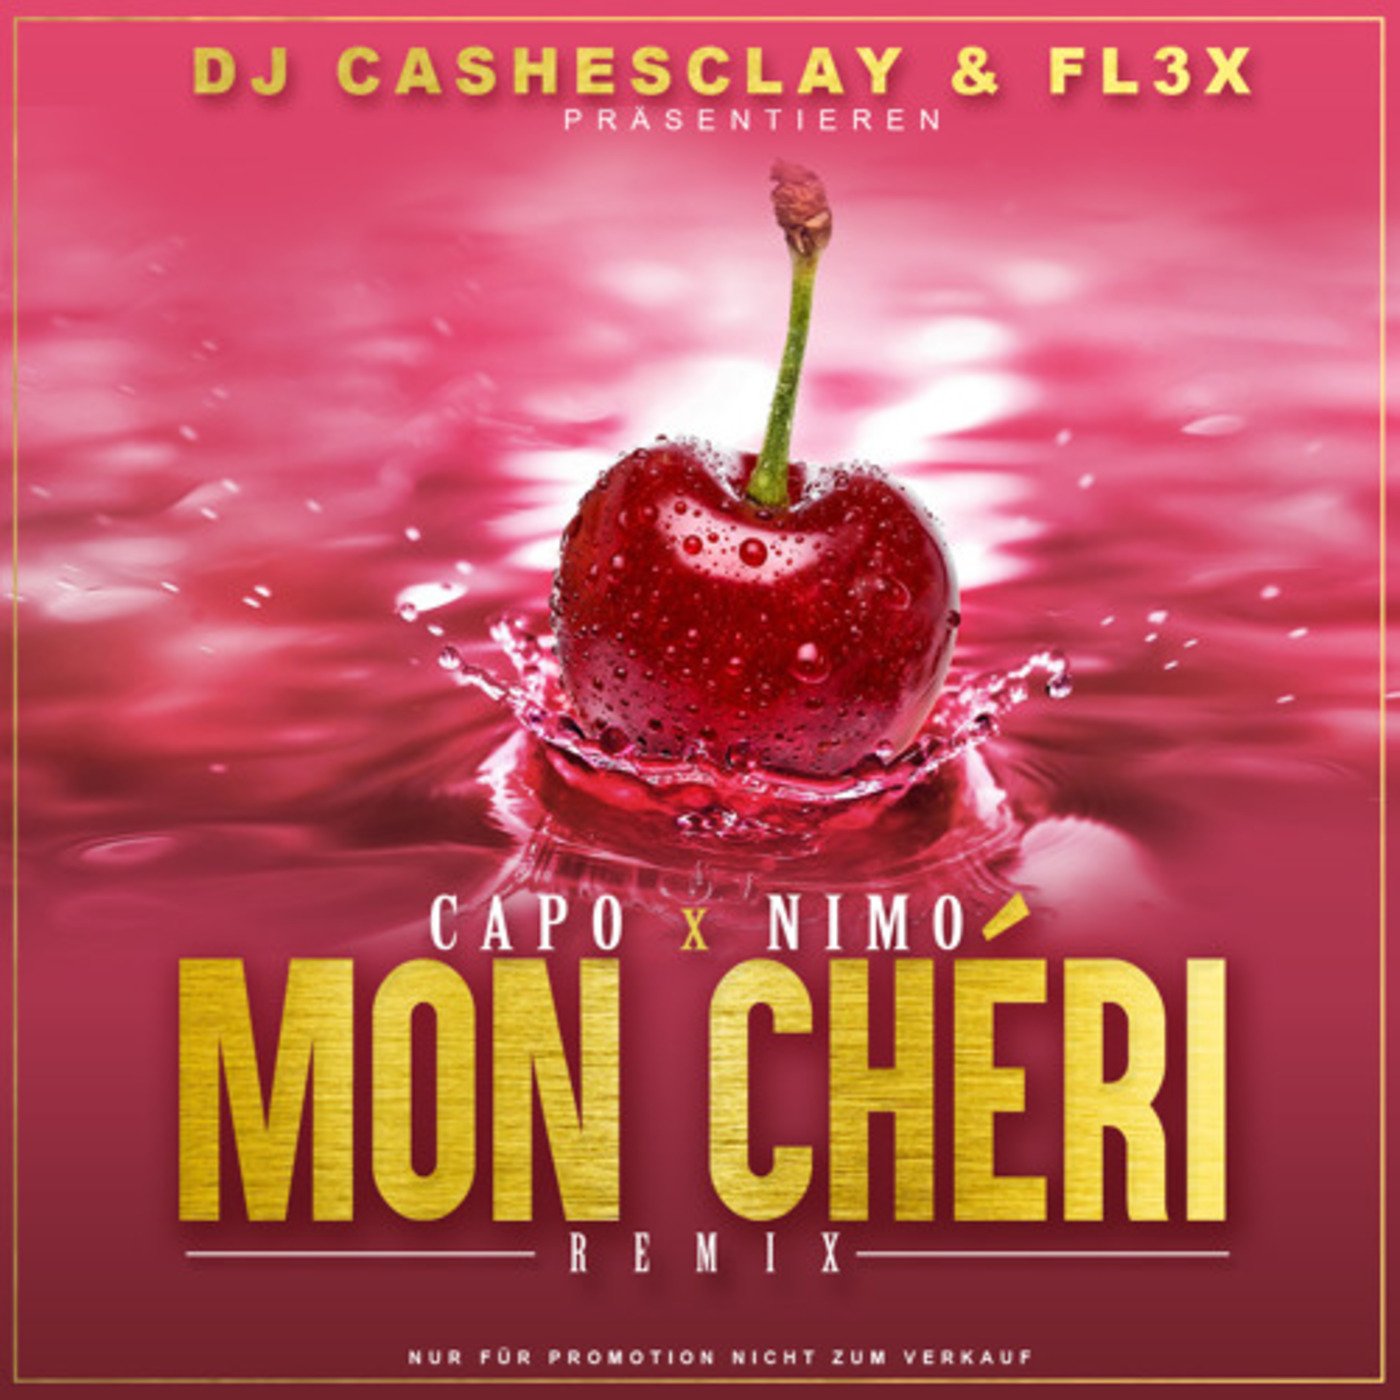 CAPO & NIMO - Mon Cheri ( DJ CASHESCLAY & FL3X REMIX )